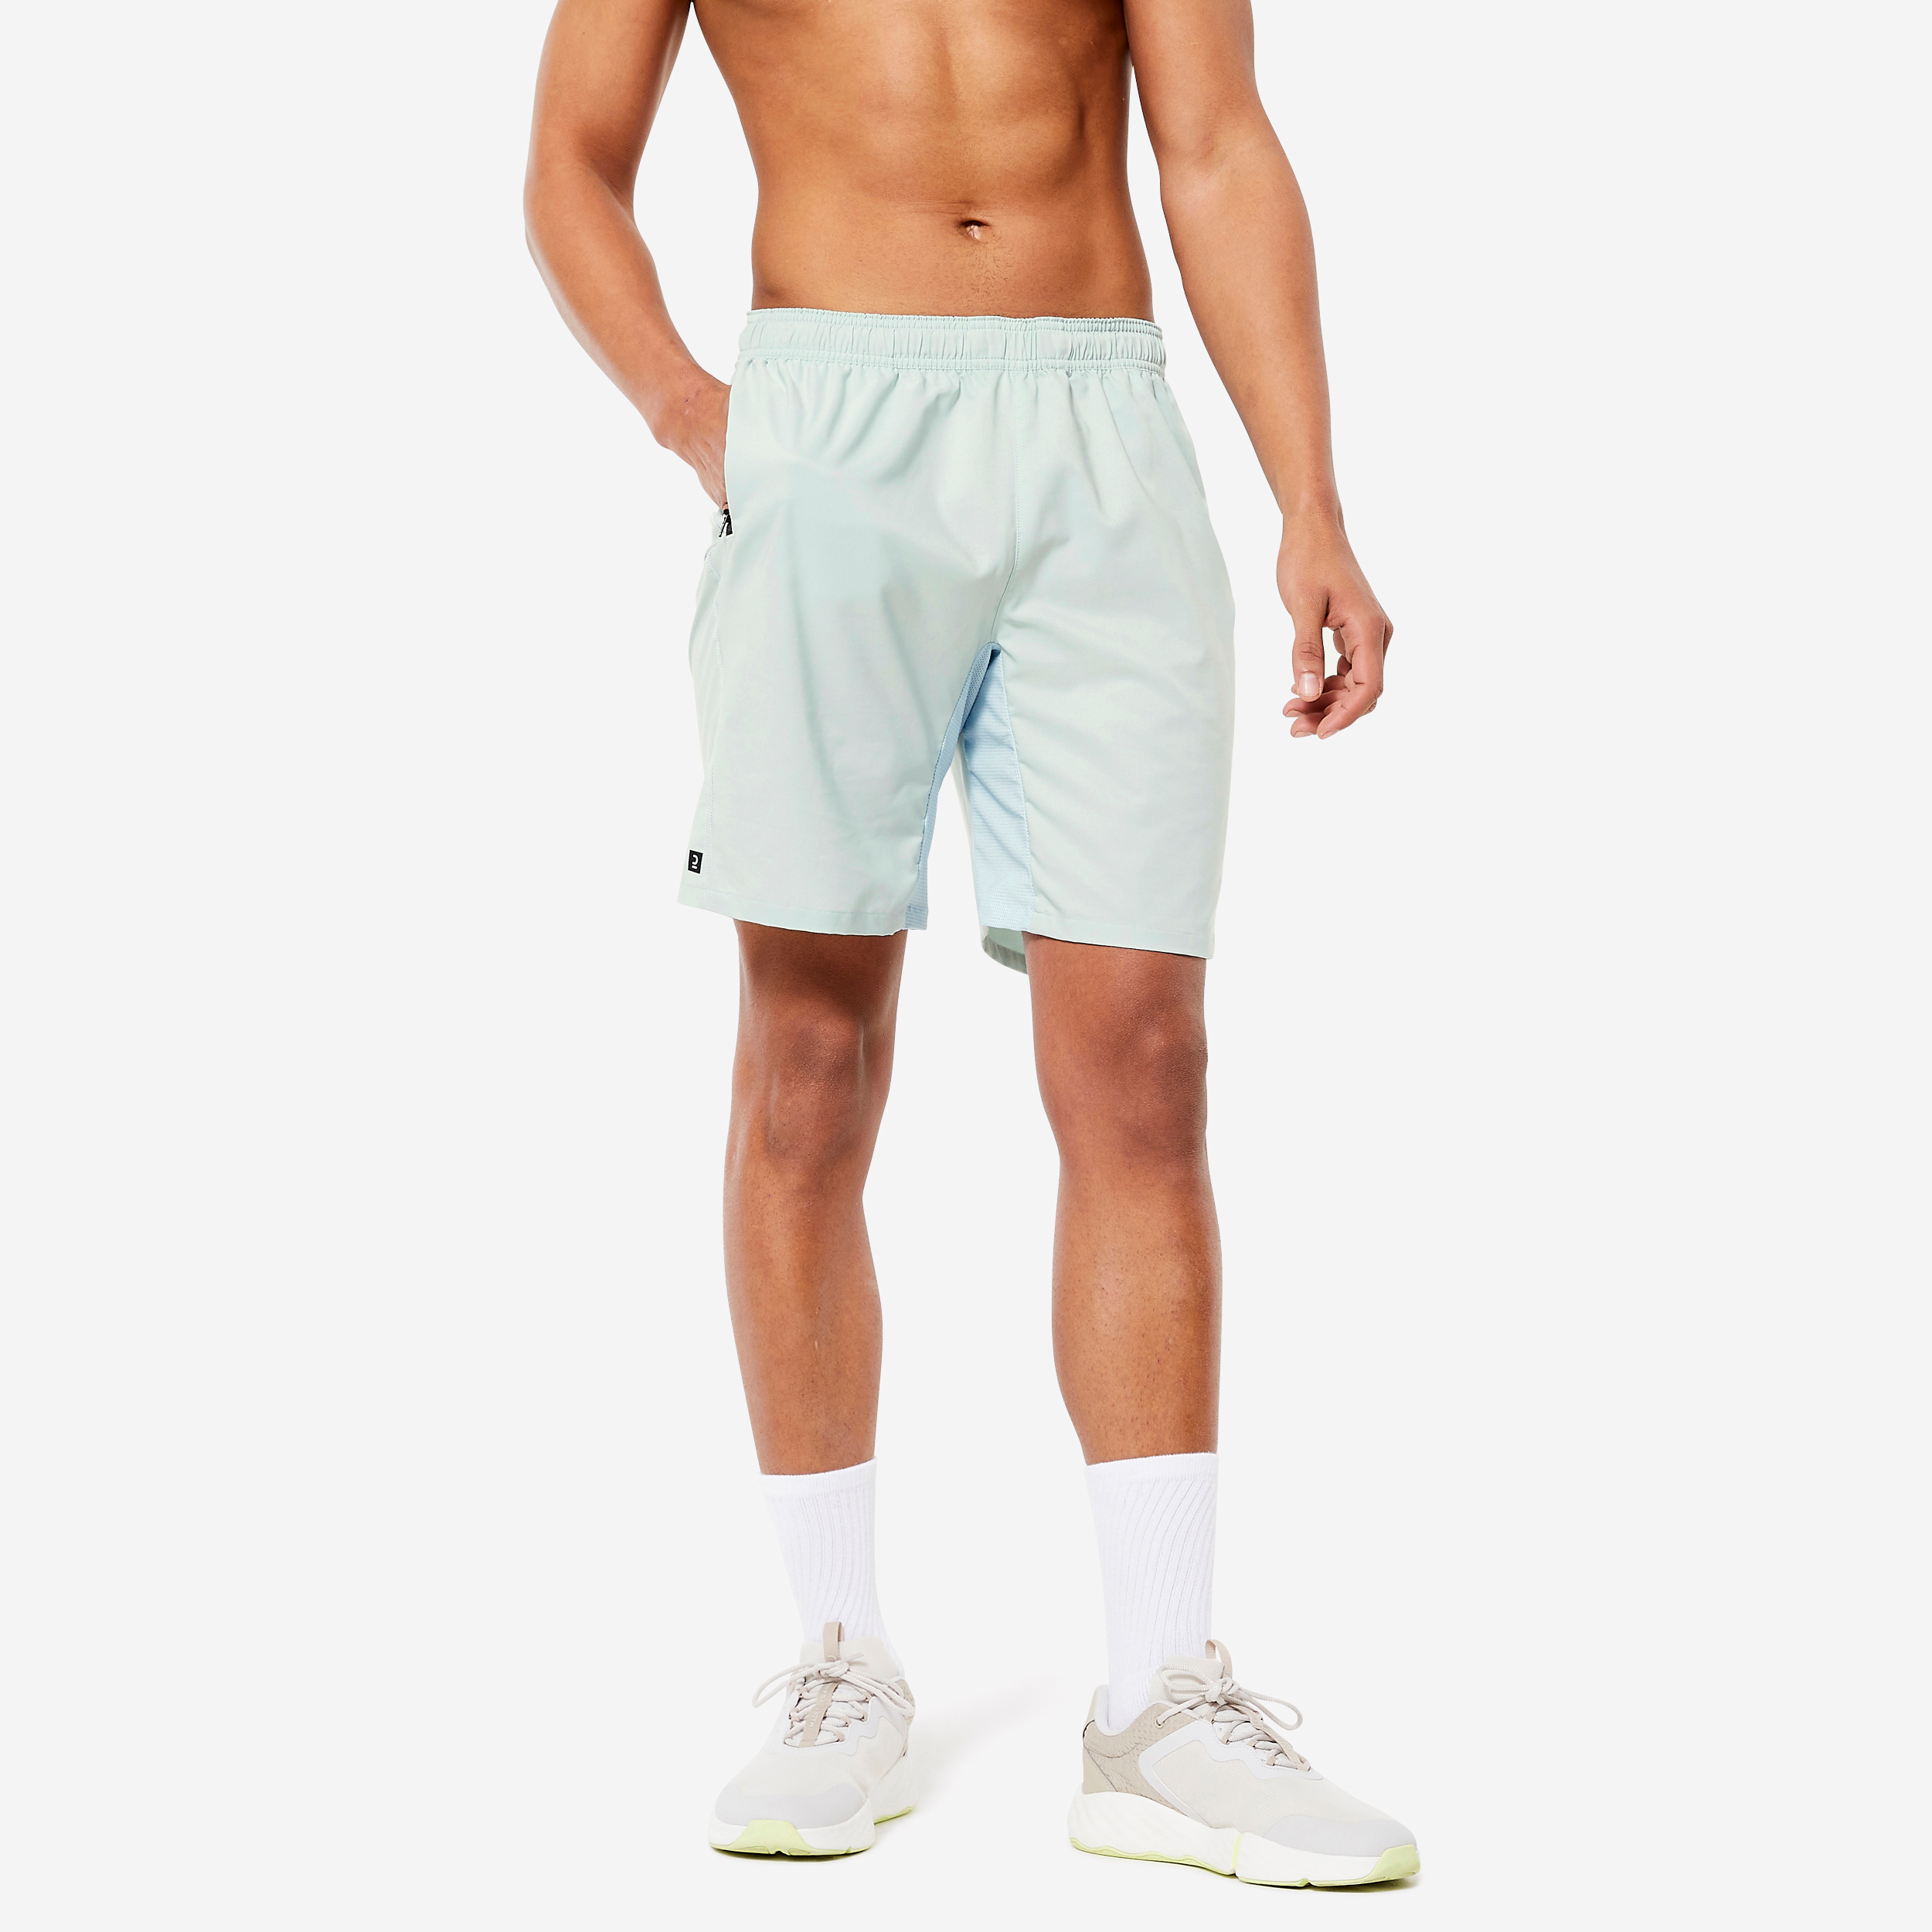 Short de fitness essentiel respirant poches zippés homme - vert